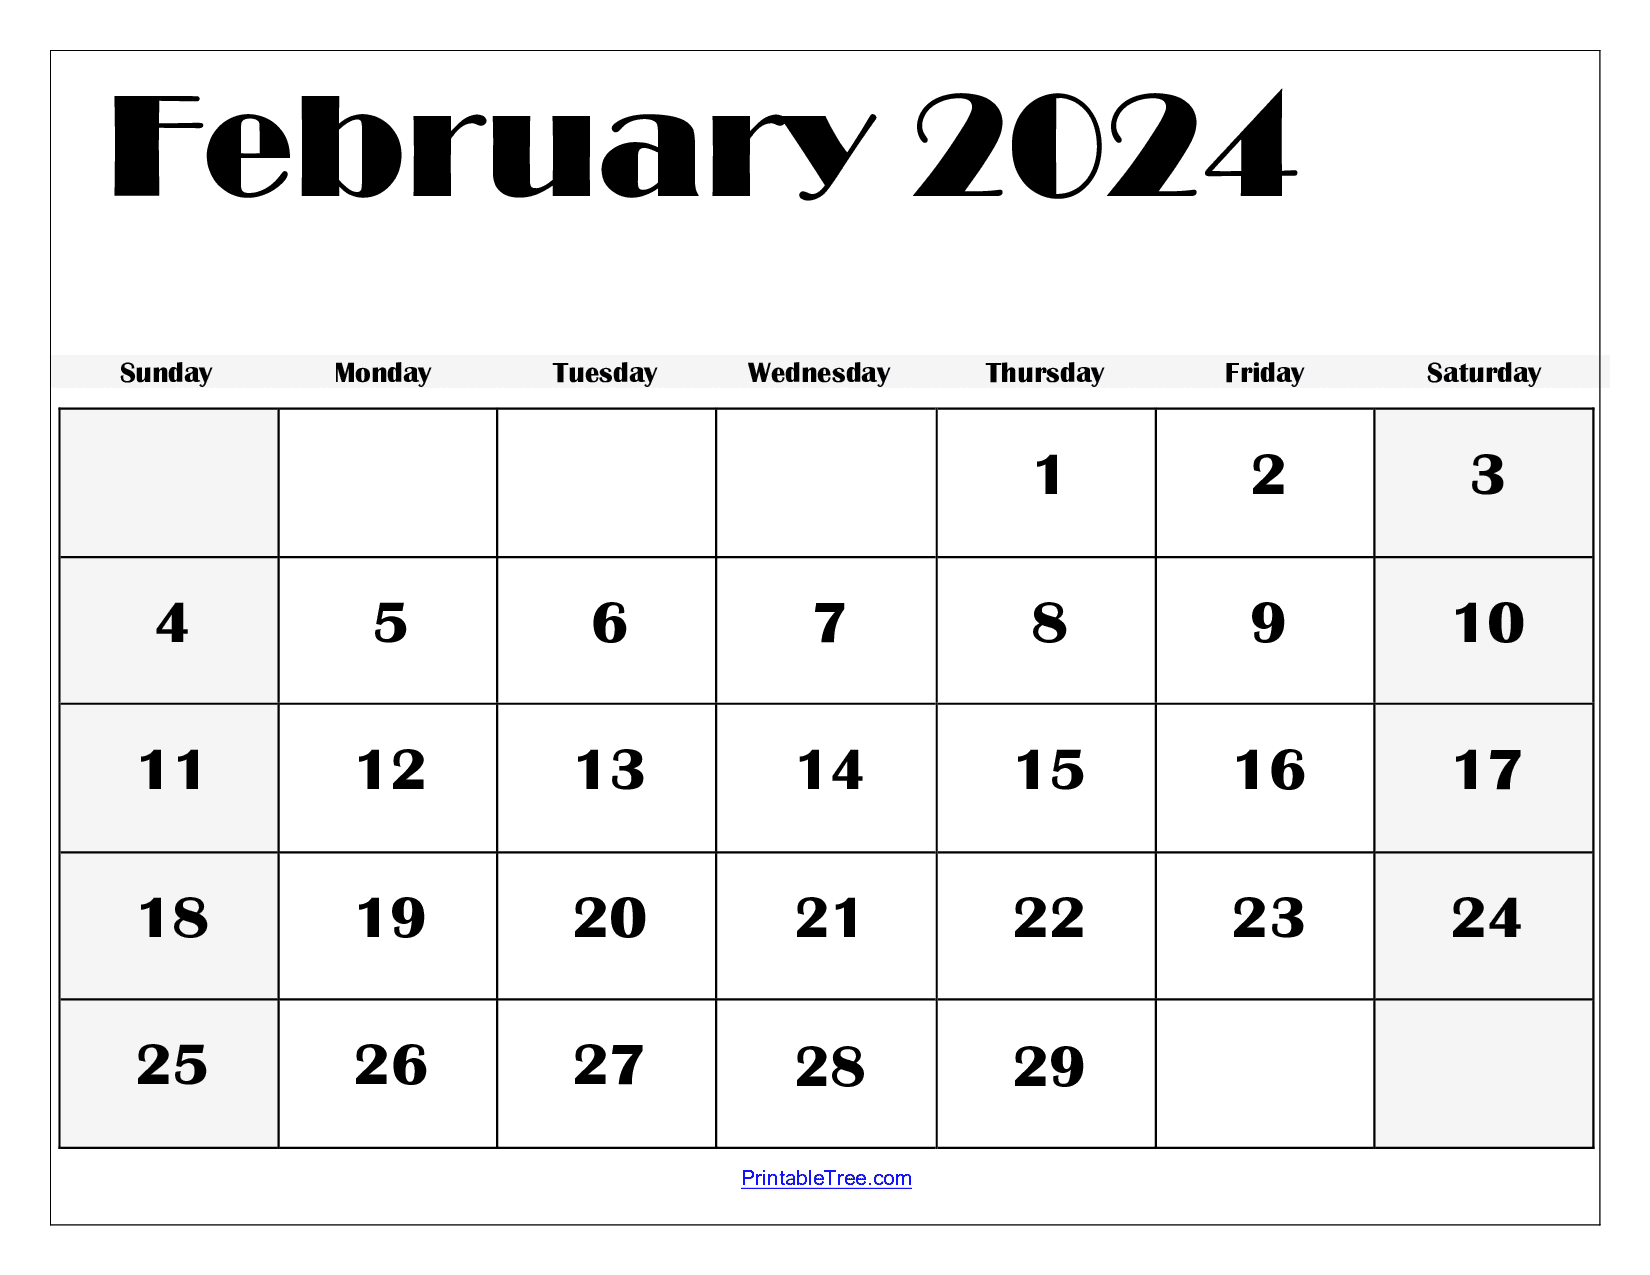 February 2024 Calendar Printable Pdf Template With Holidays for Printable Monthly Calendar 2024 February